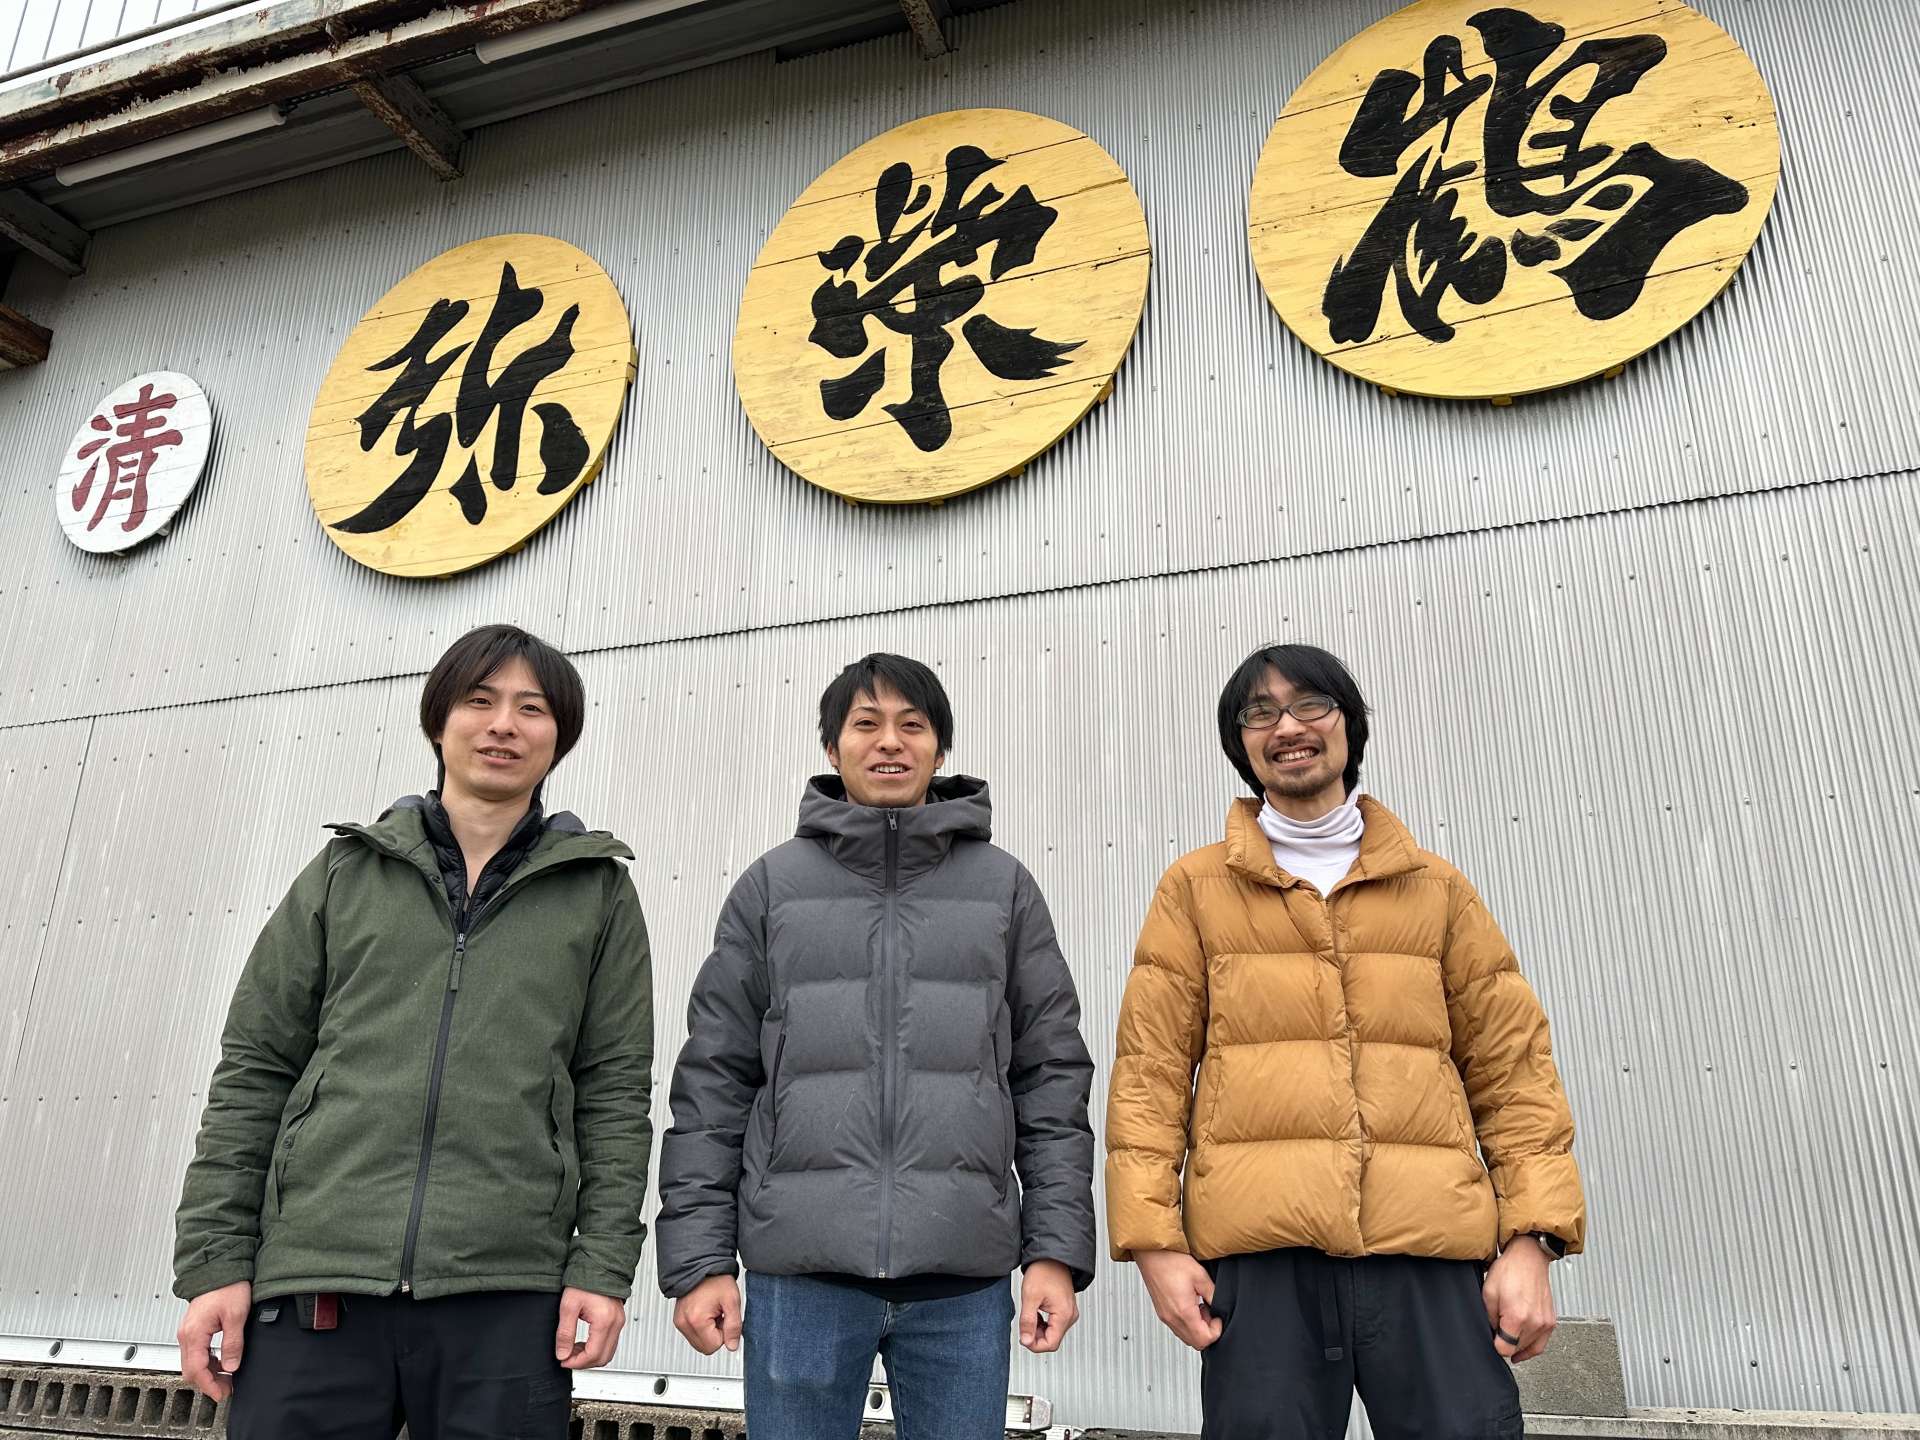 The ever forward-thinking Yukimachi brothers, bringing innovative flair to the world of sake.